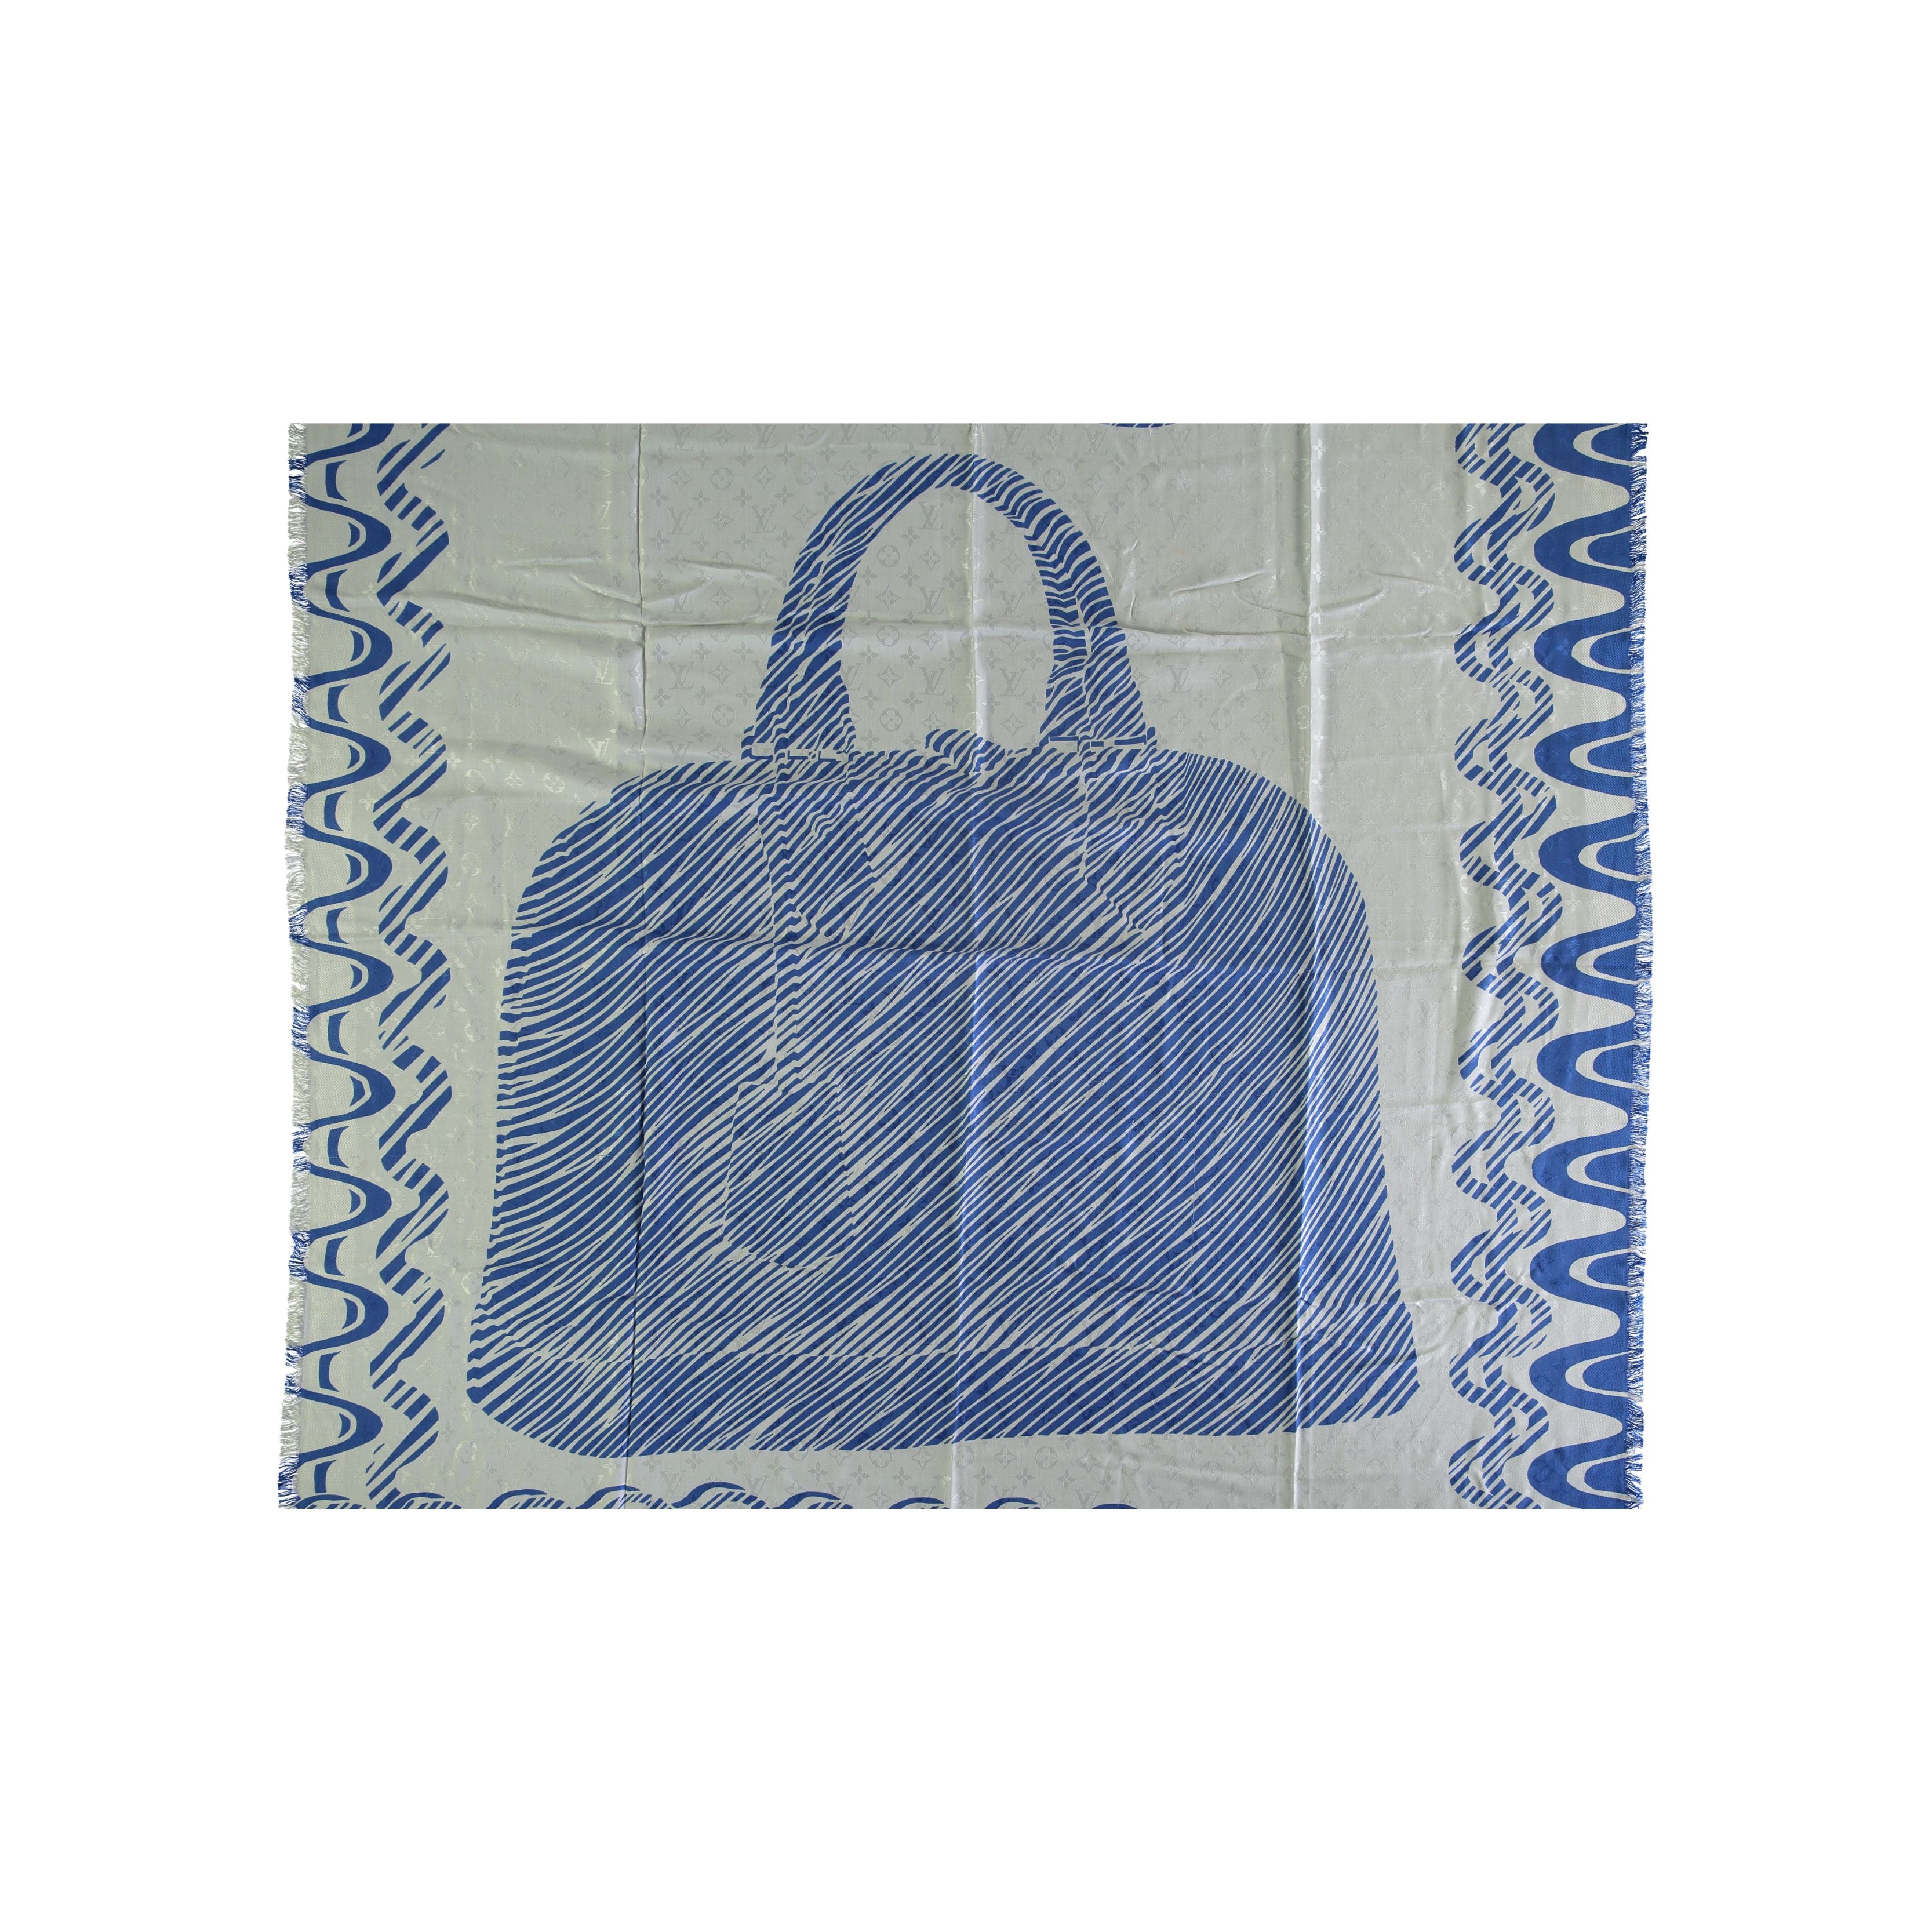 blue white louis vuittons handbags